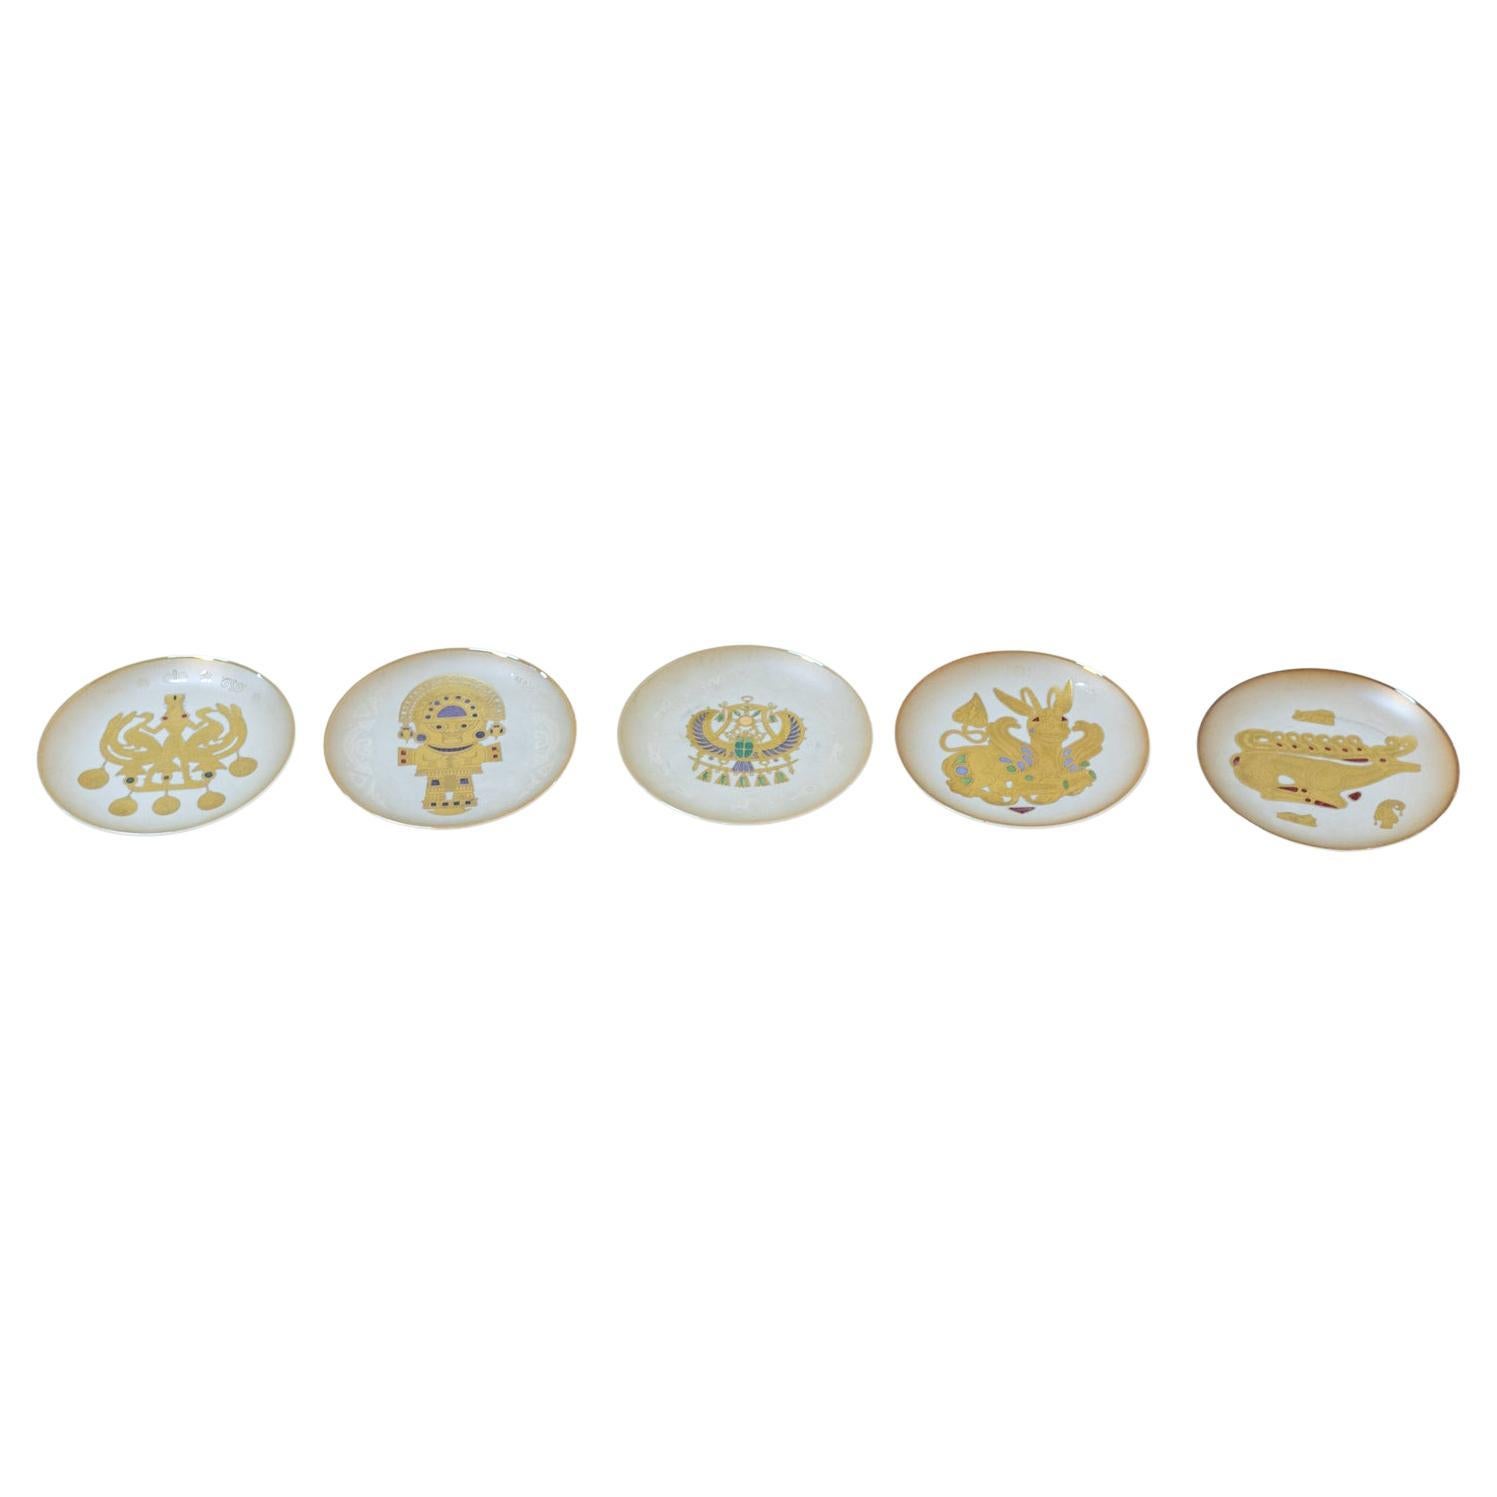 Arte Morbelli Five Porcelain Plates with 24k Golden Inserts